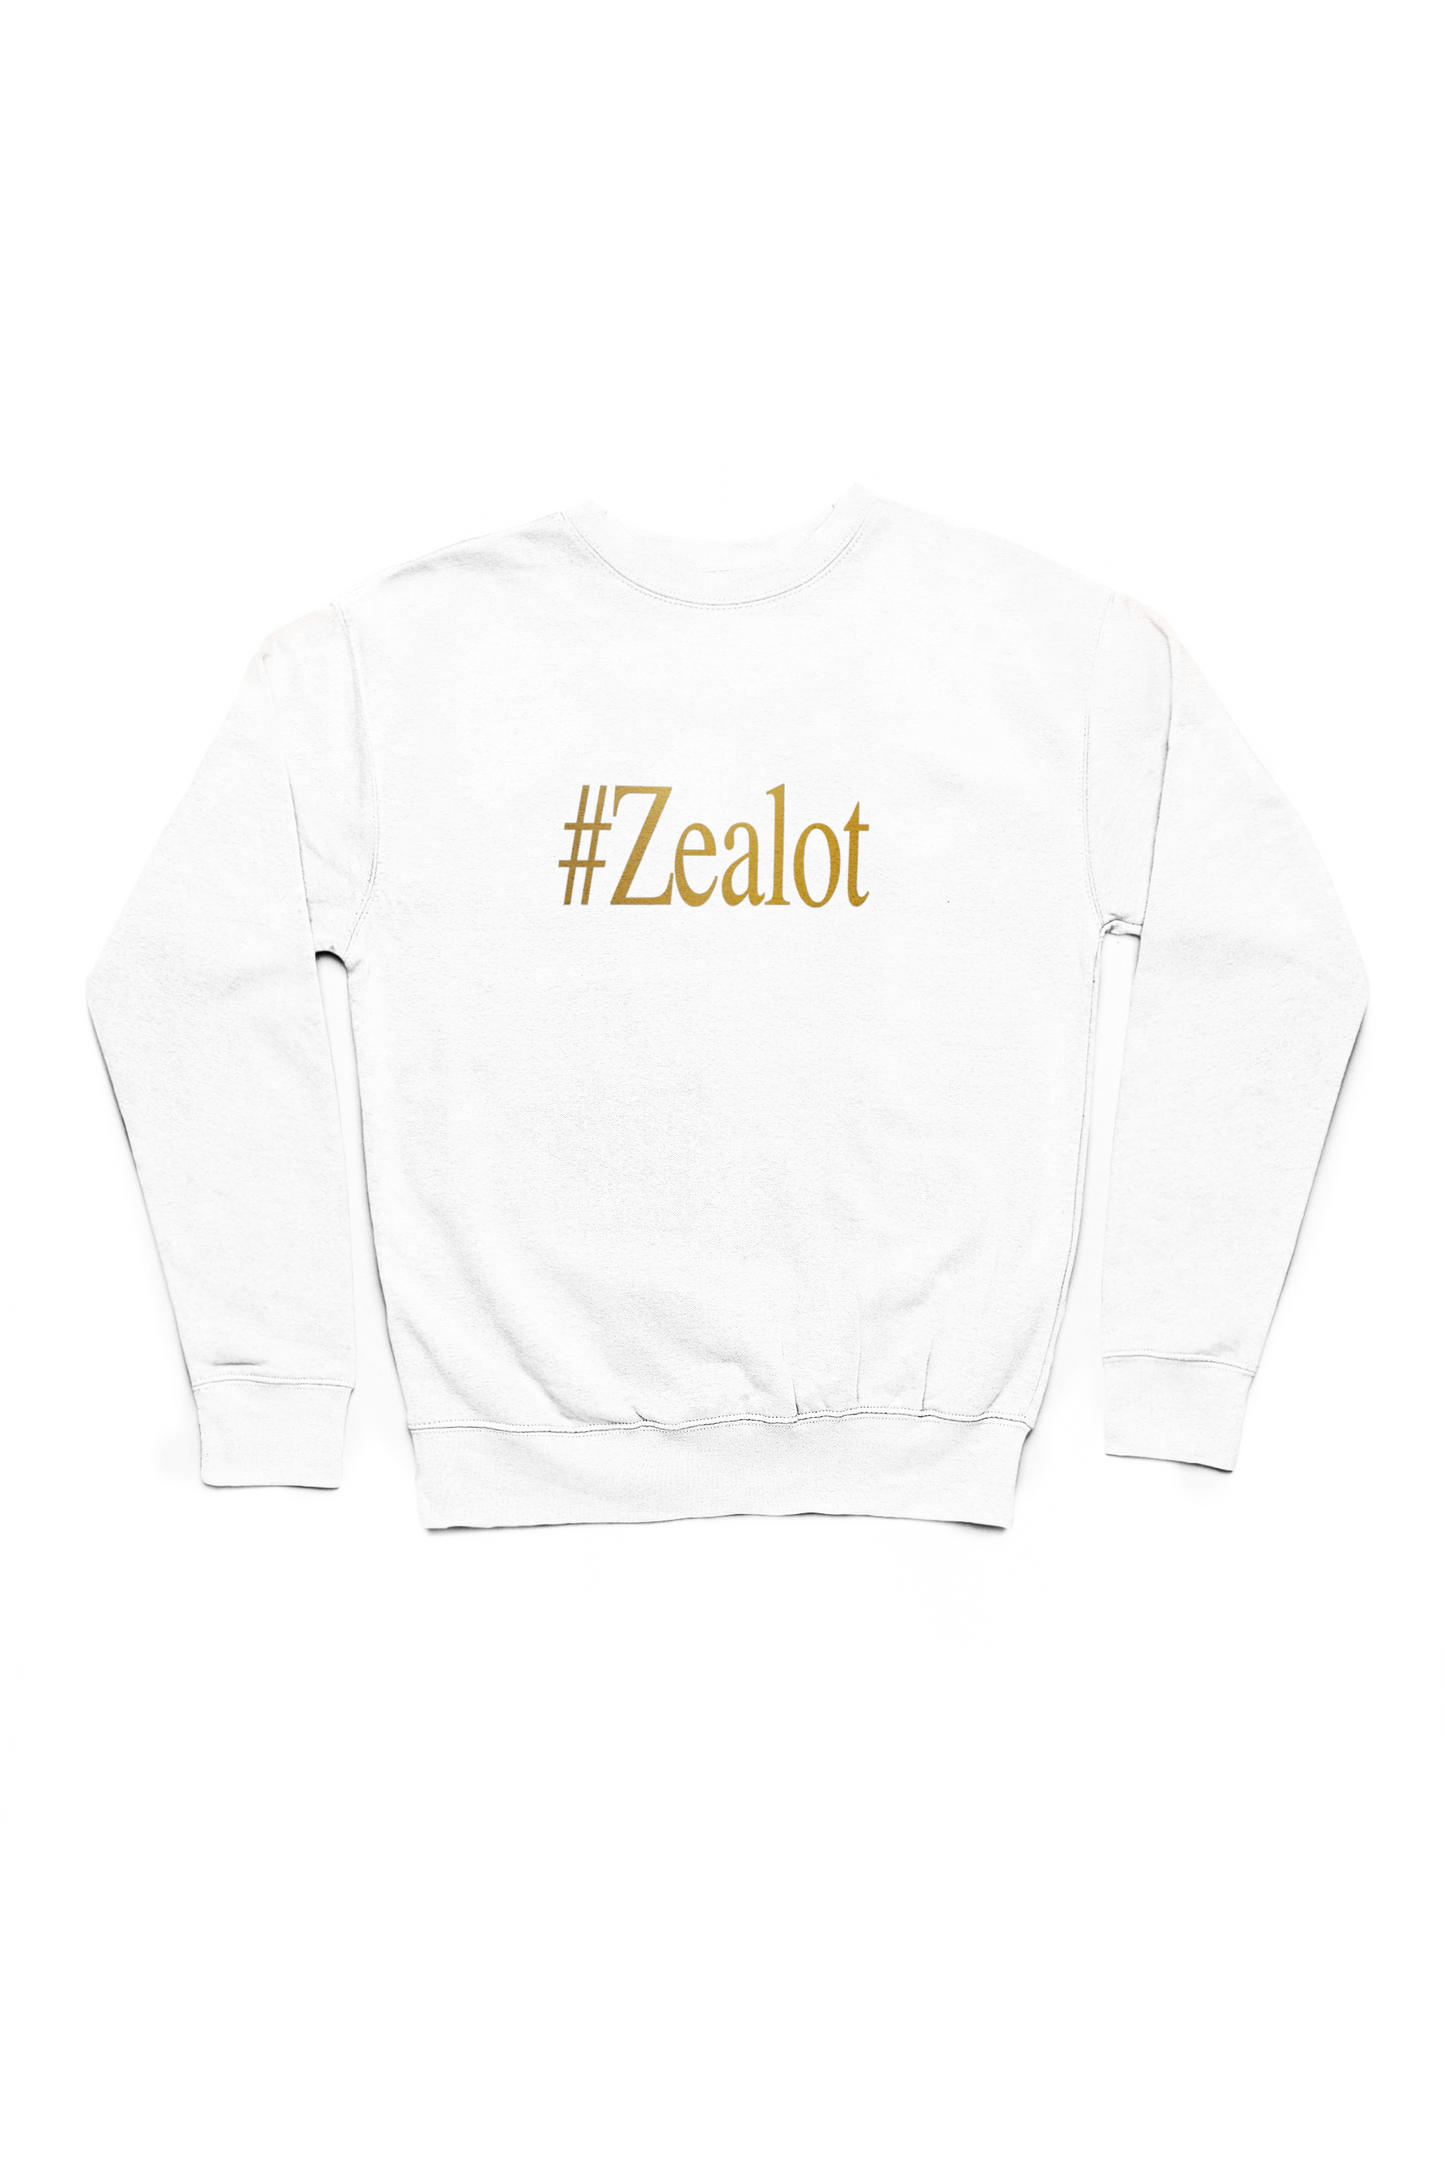 #ZEALOT Sweatshirt (Neutral Colors)